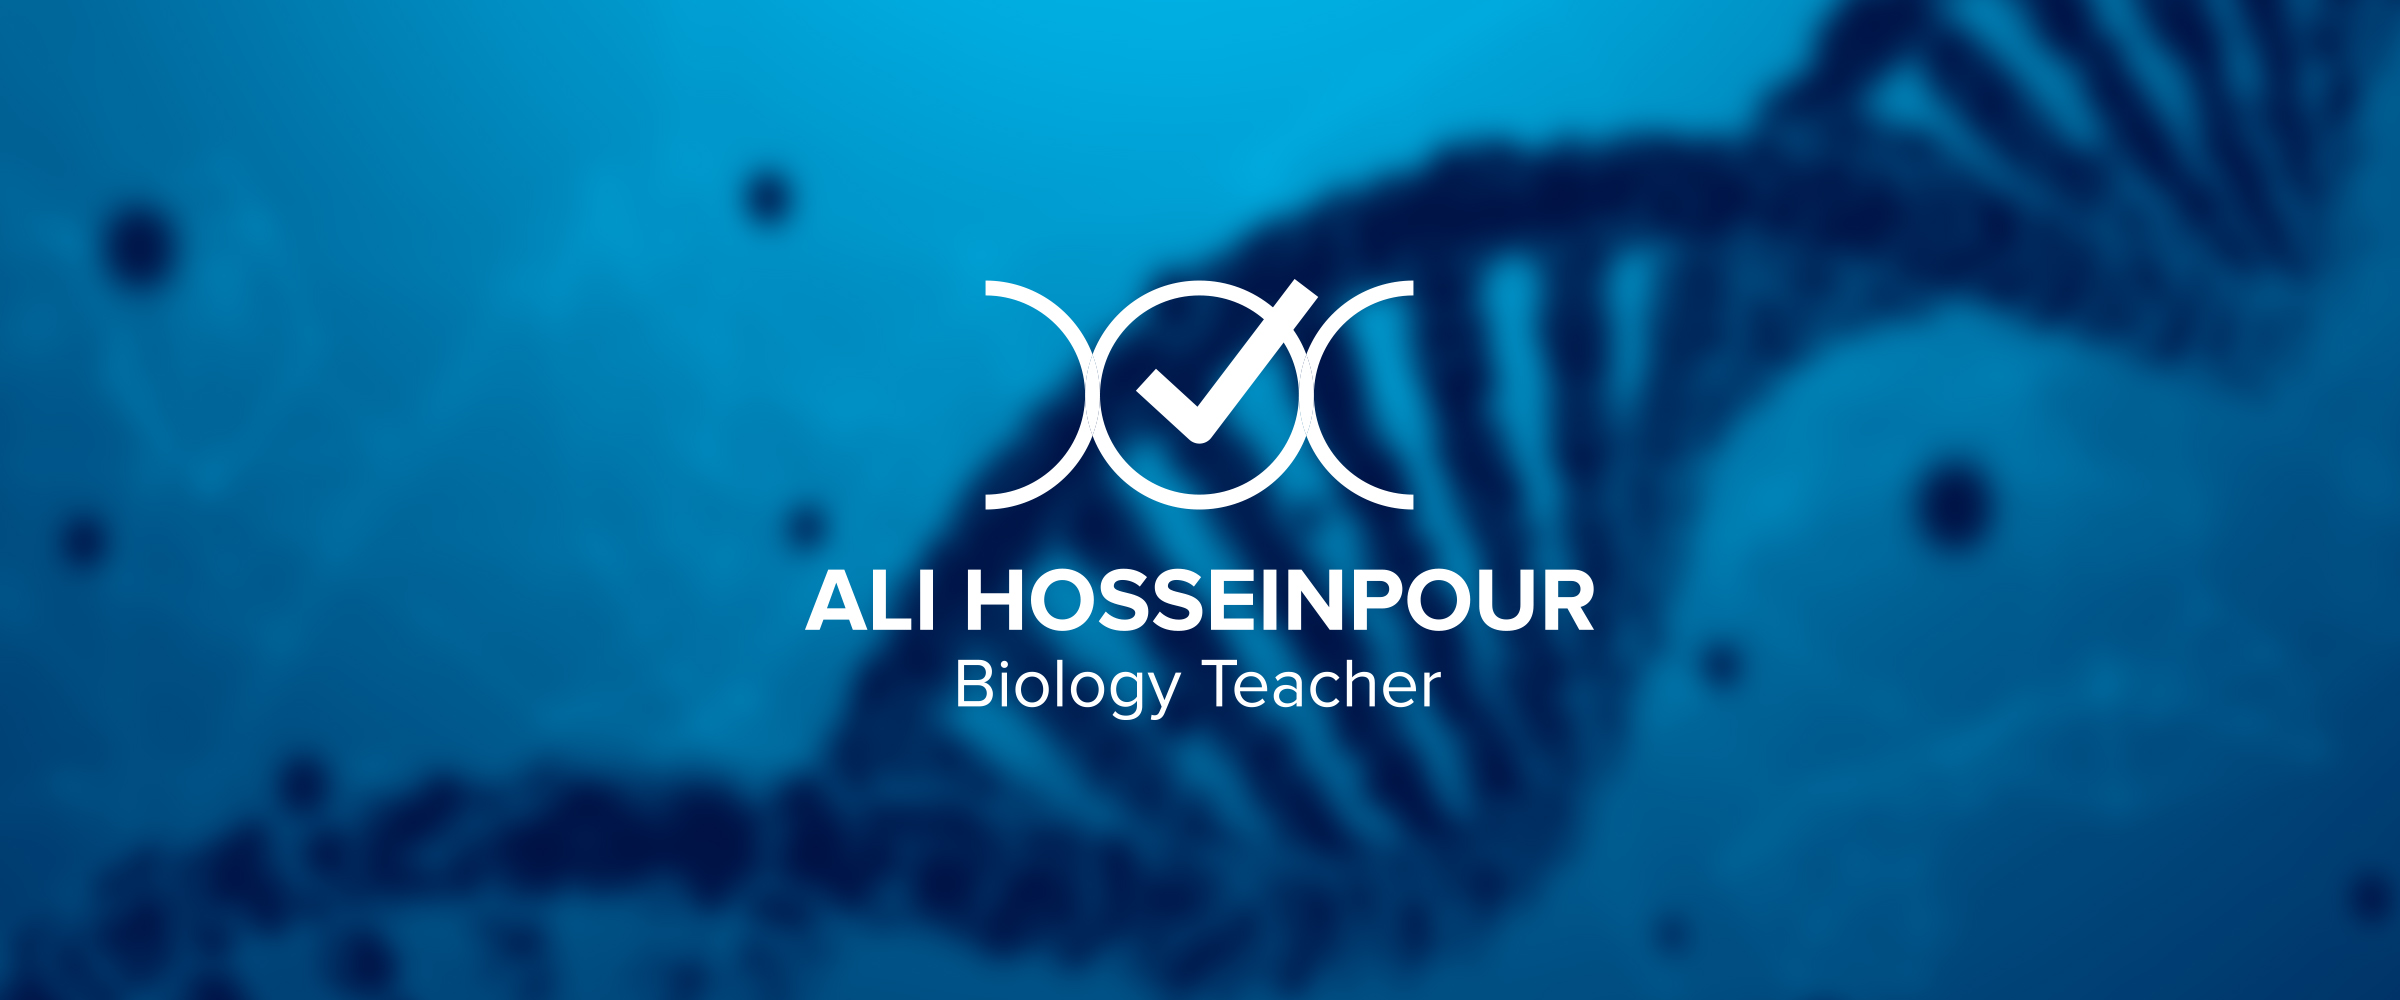 Ali Hosseinpour